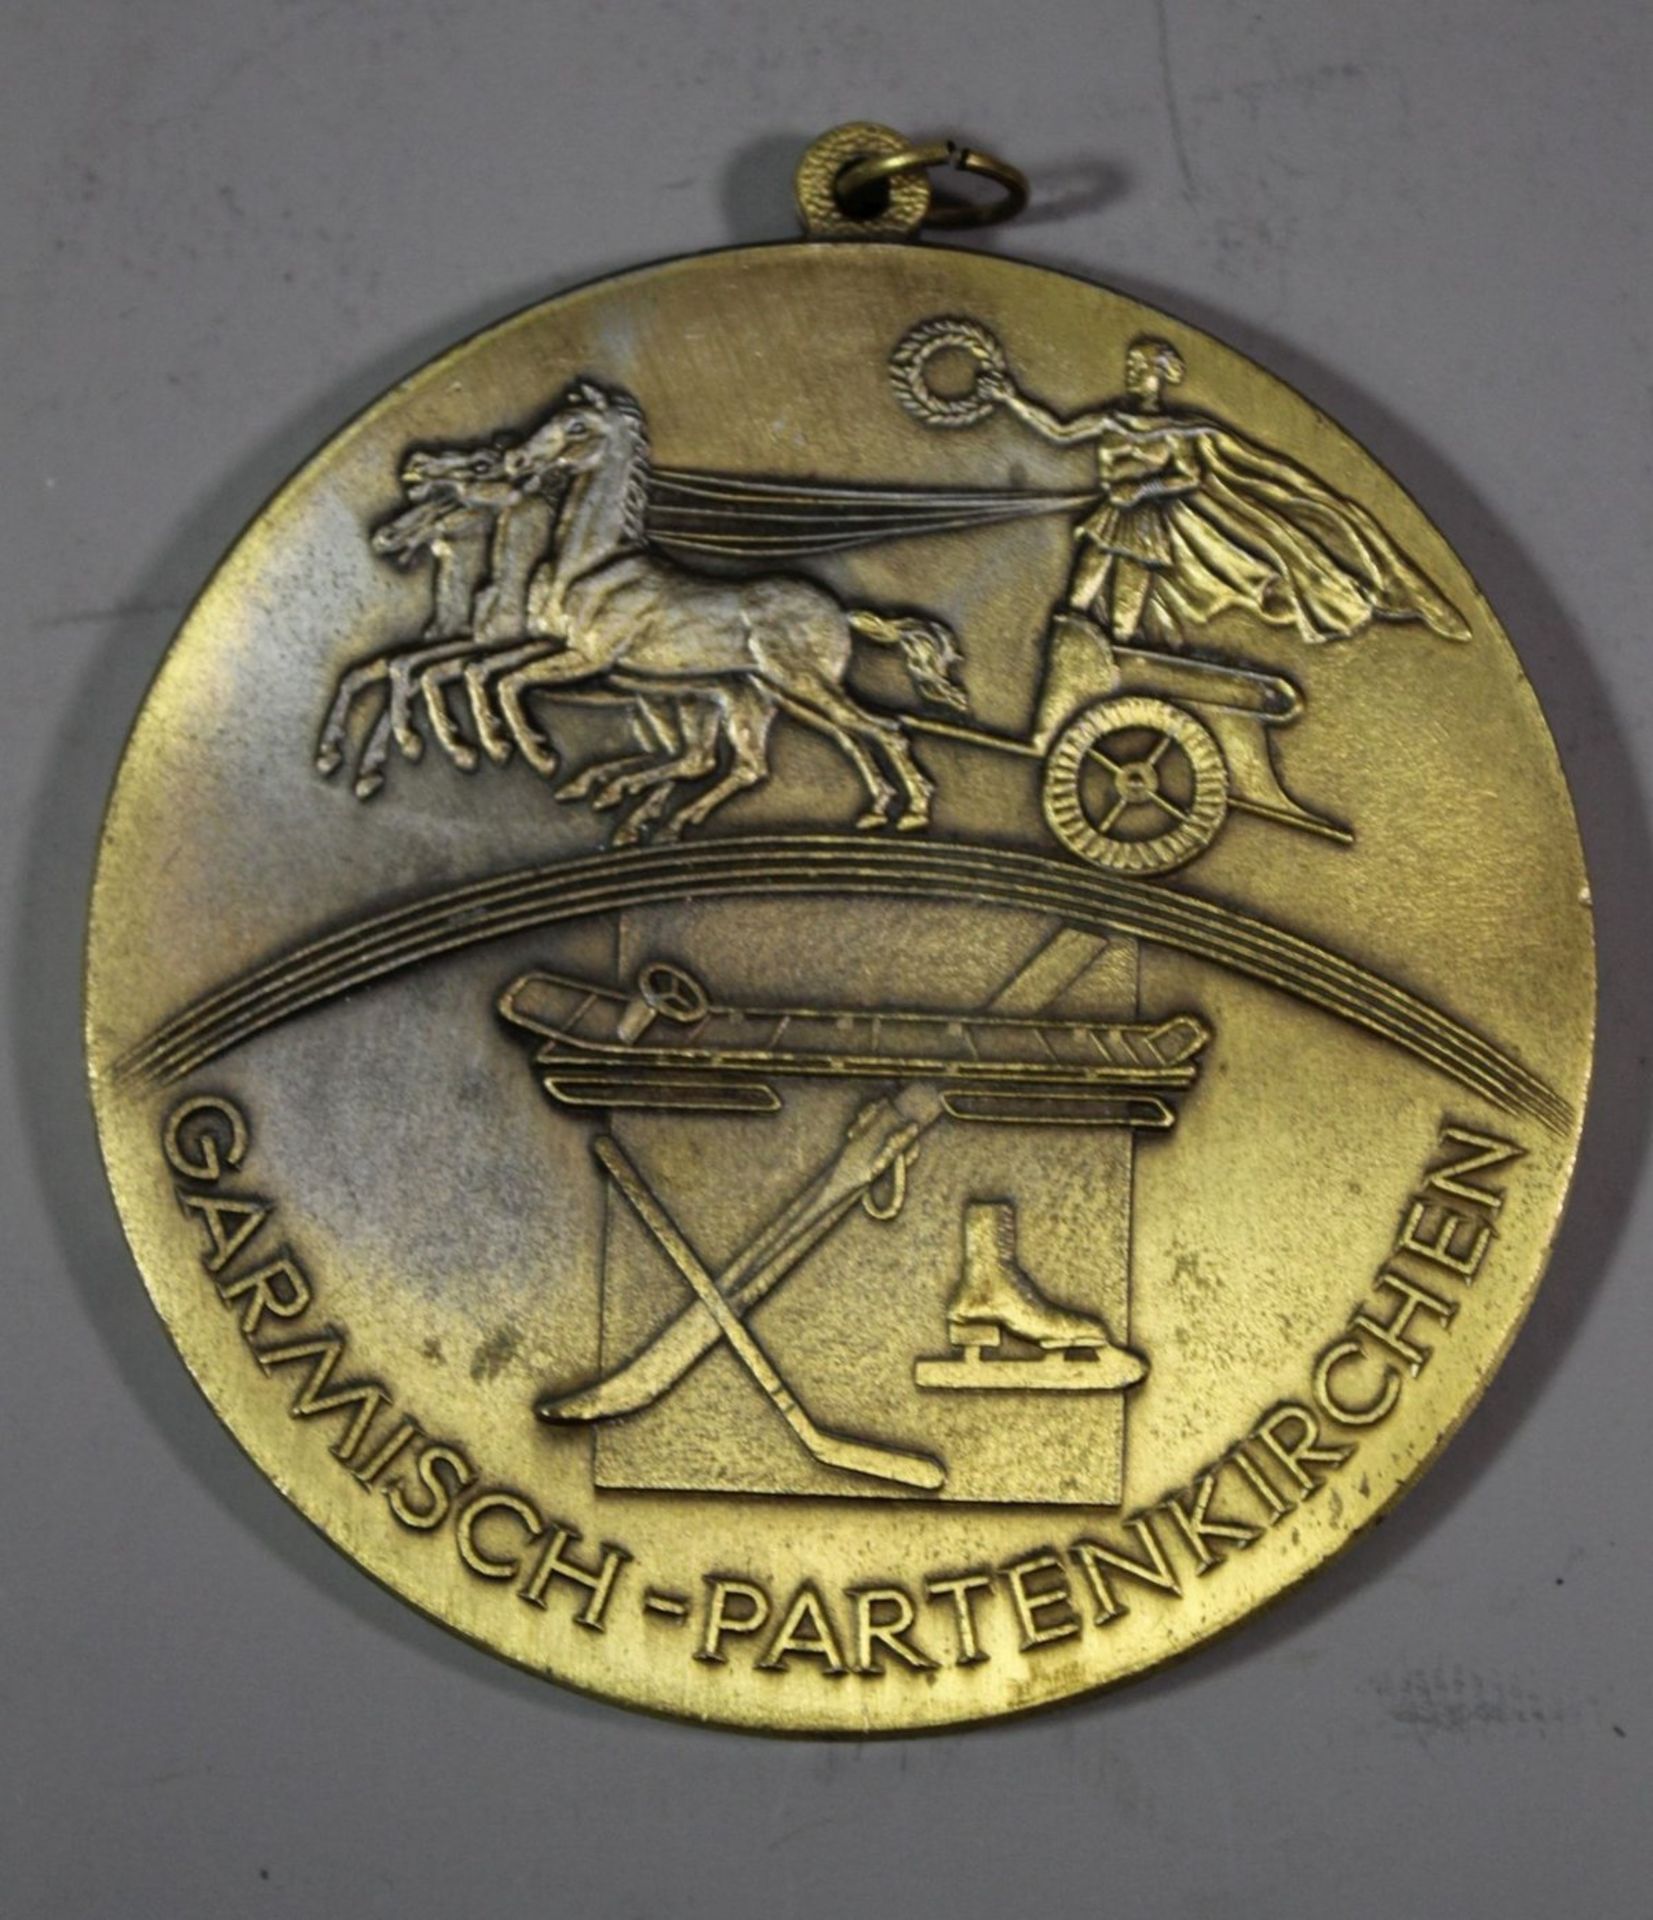 gr. Medaille sowie Postkarte, Olympische Winterspiele 1936, Medaille 8cm. - Image 2 of 2